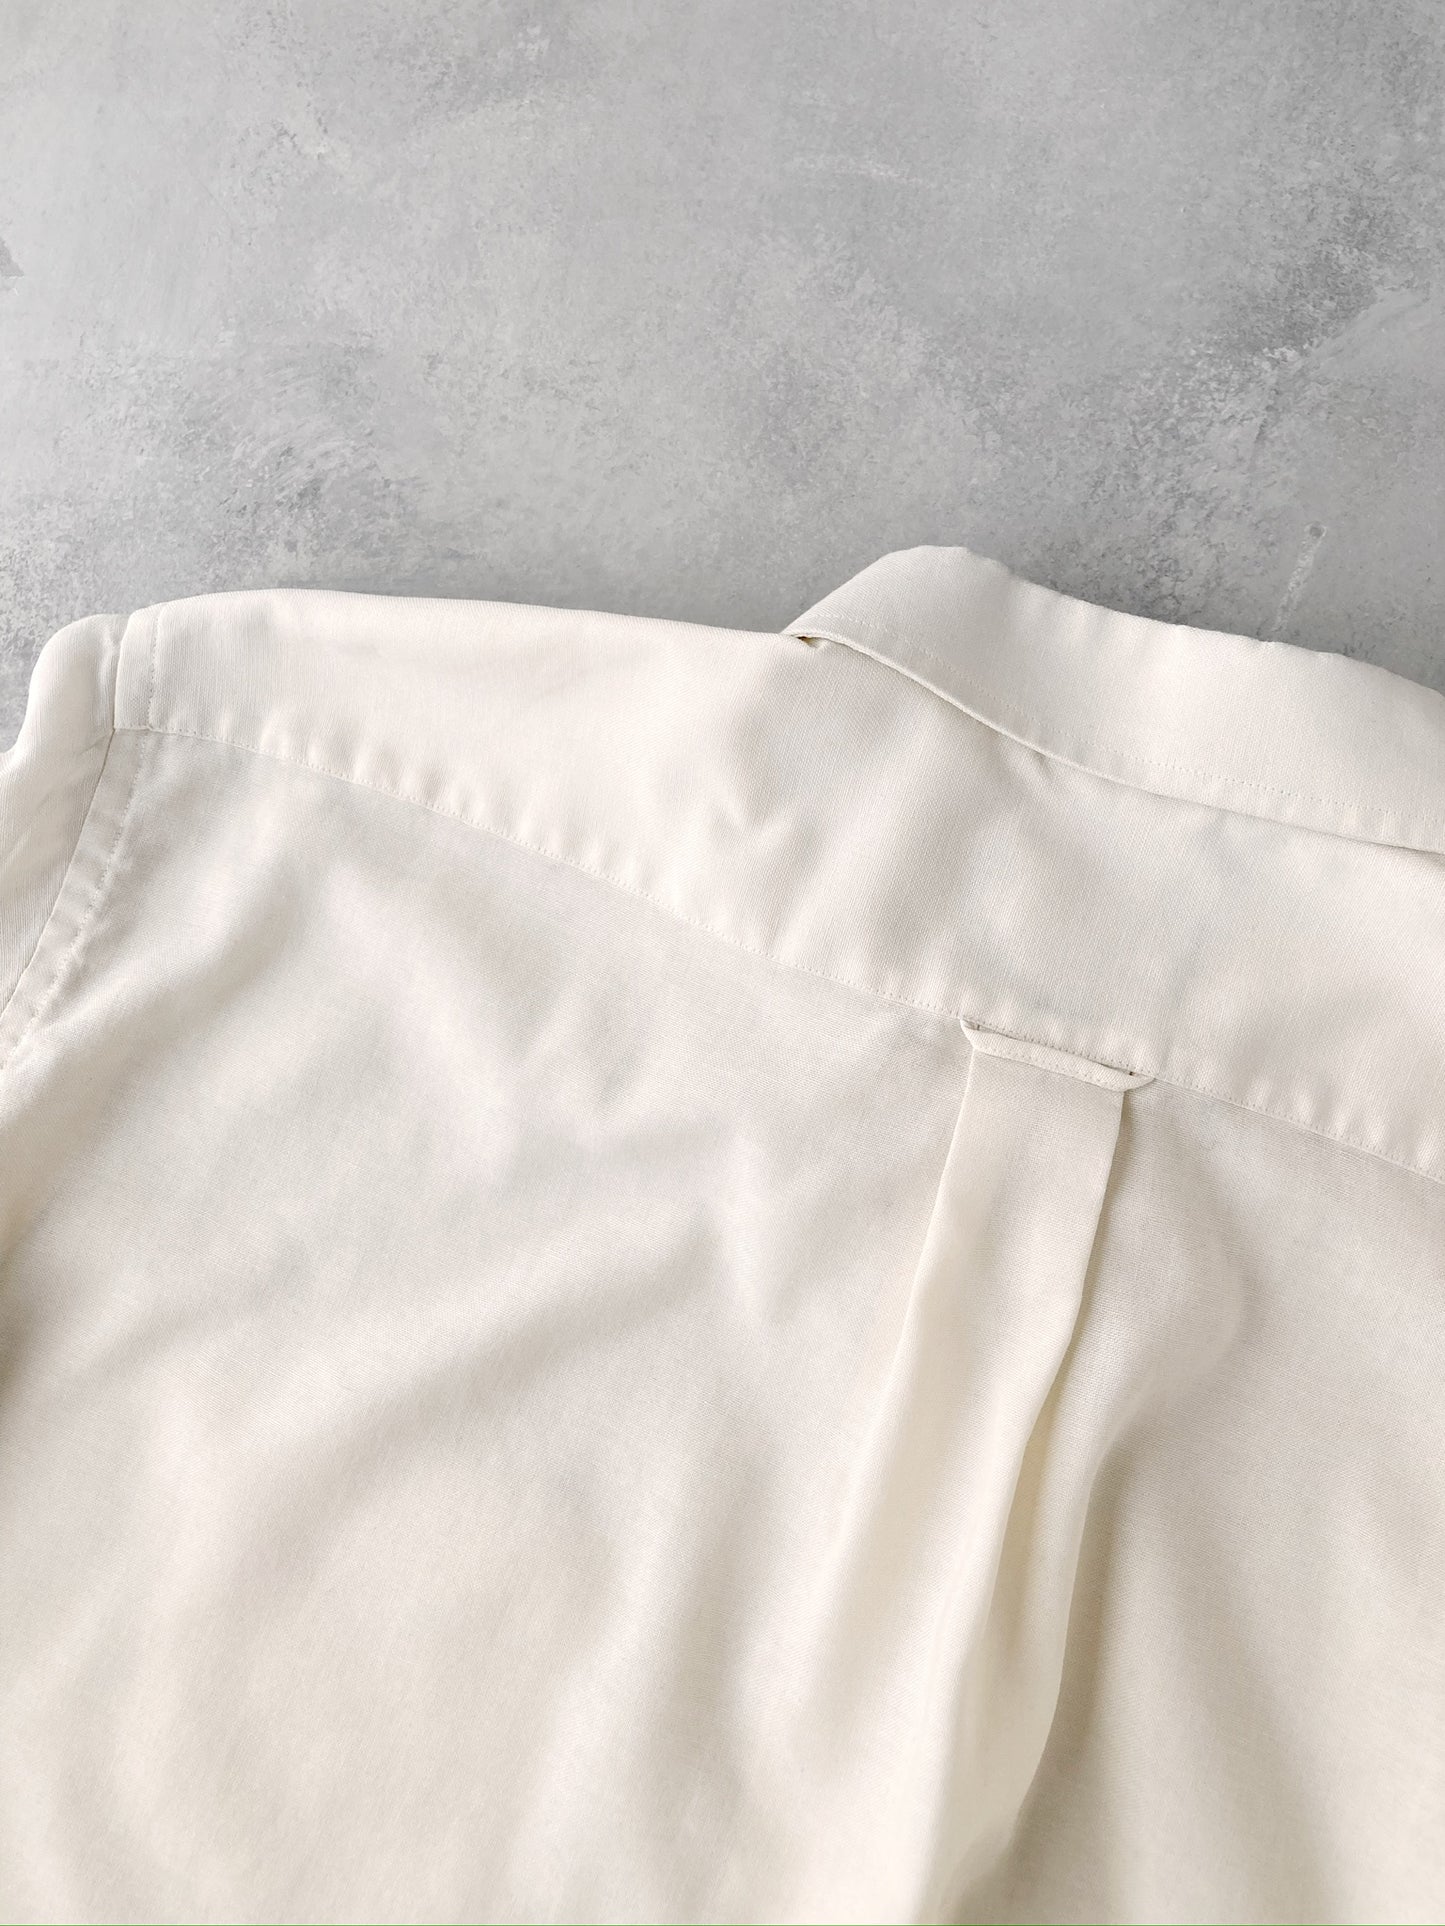 White Collared Shirt 00's - XL